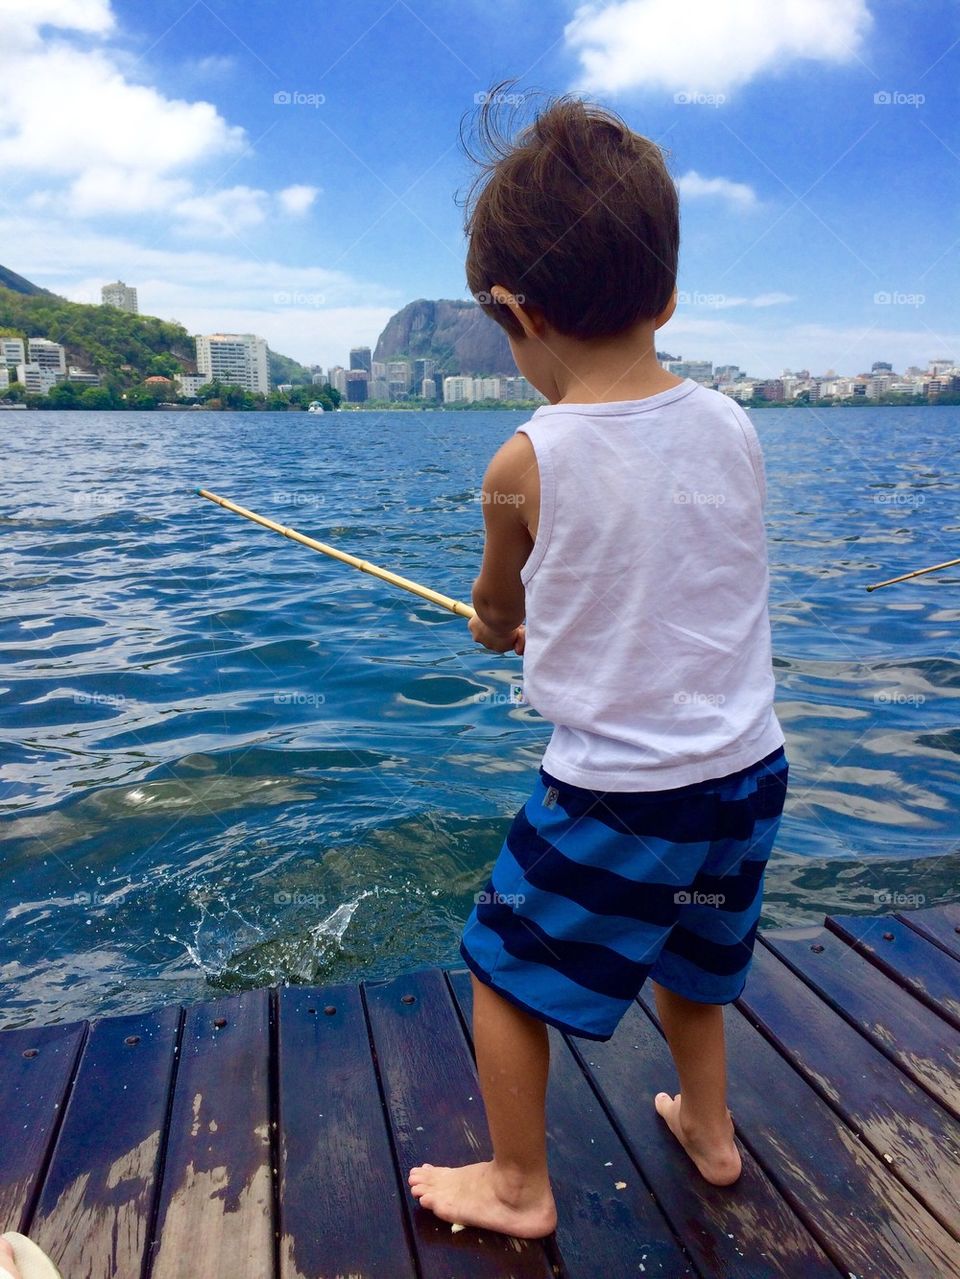 A small boy fishing in sea